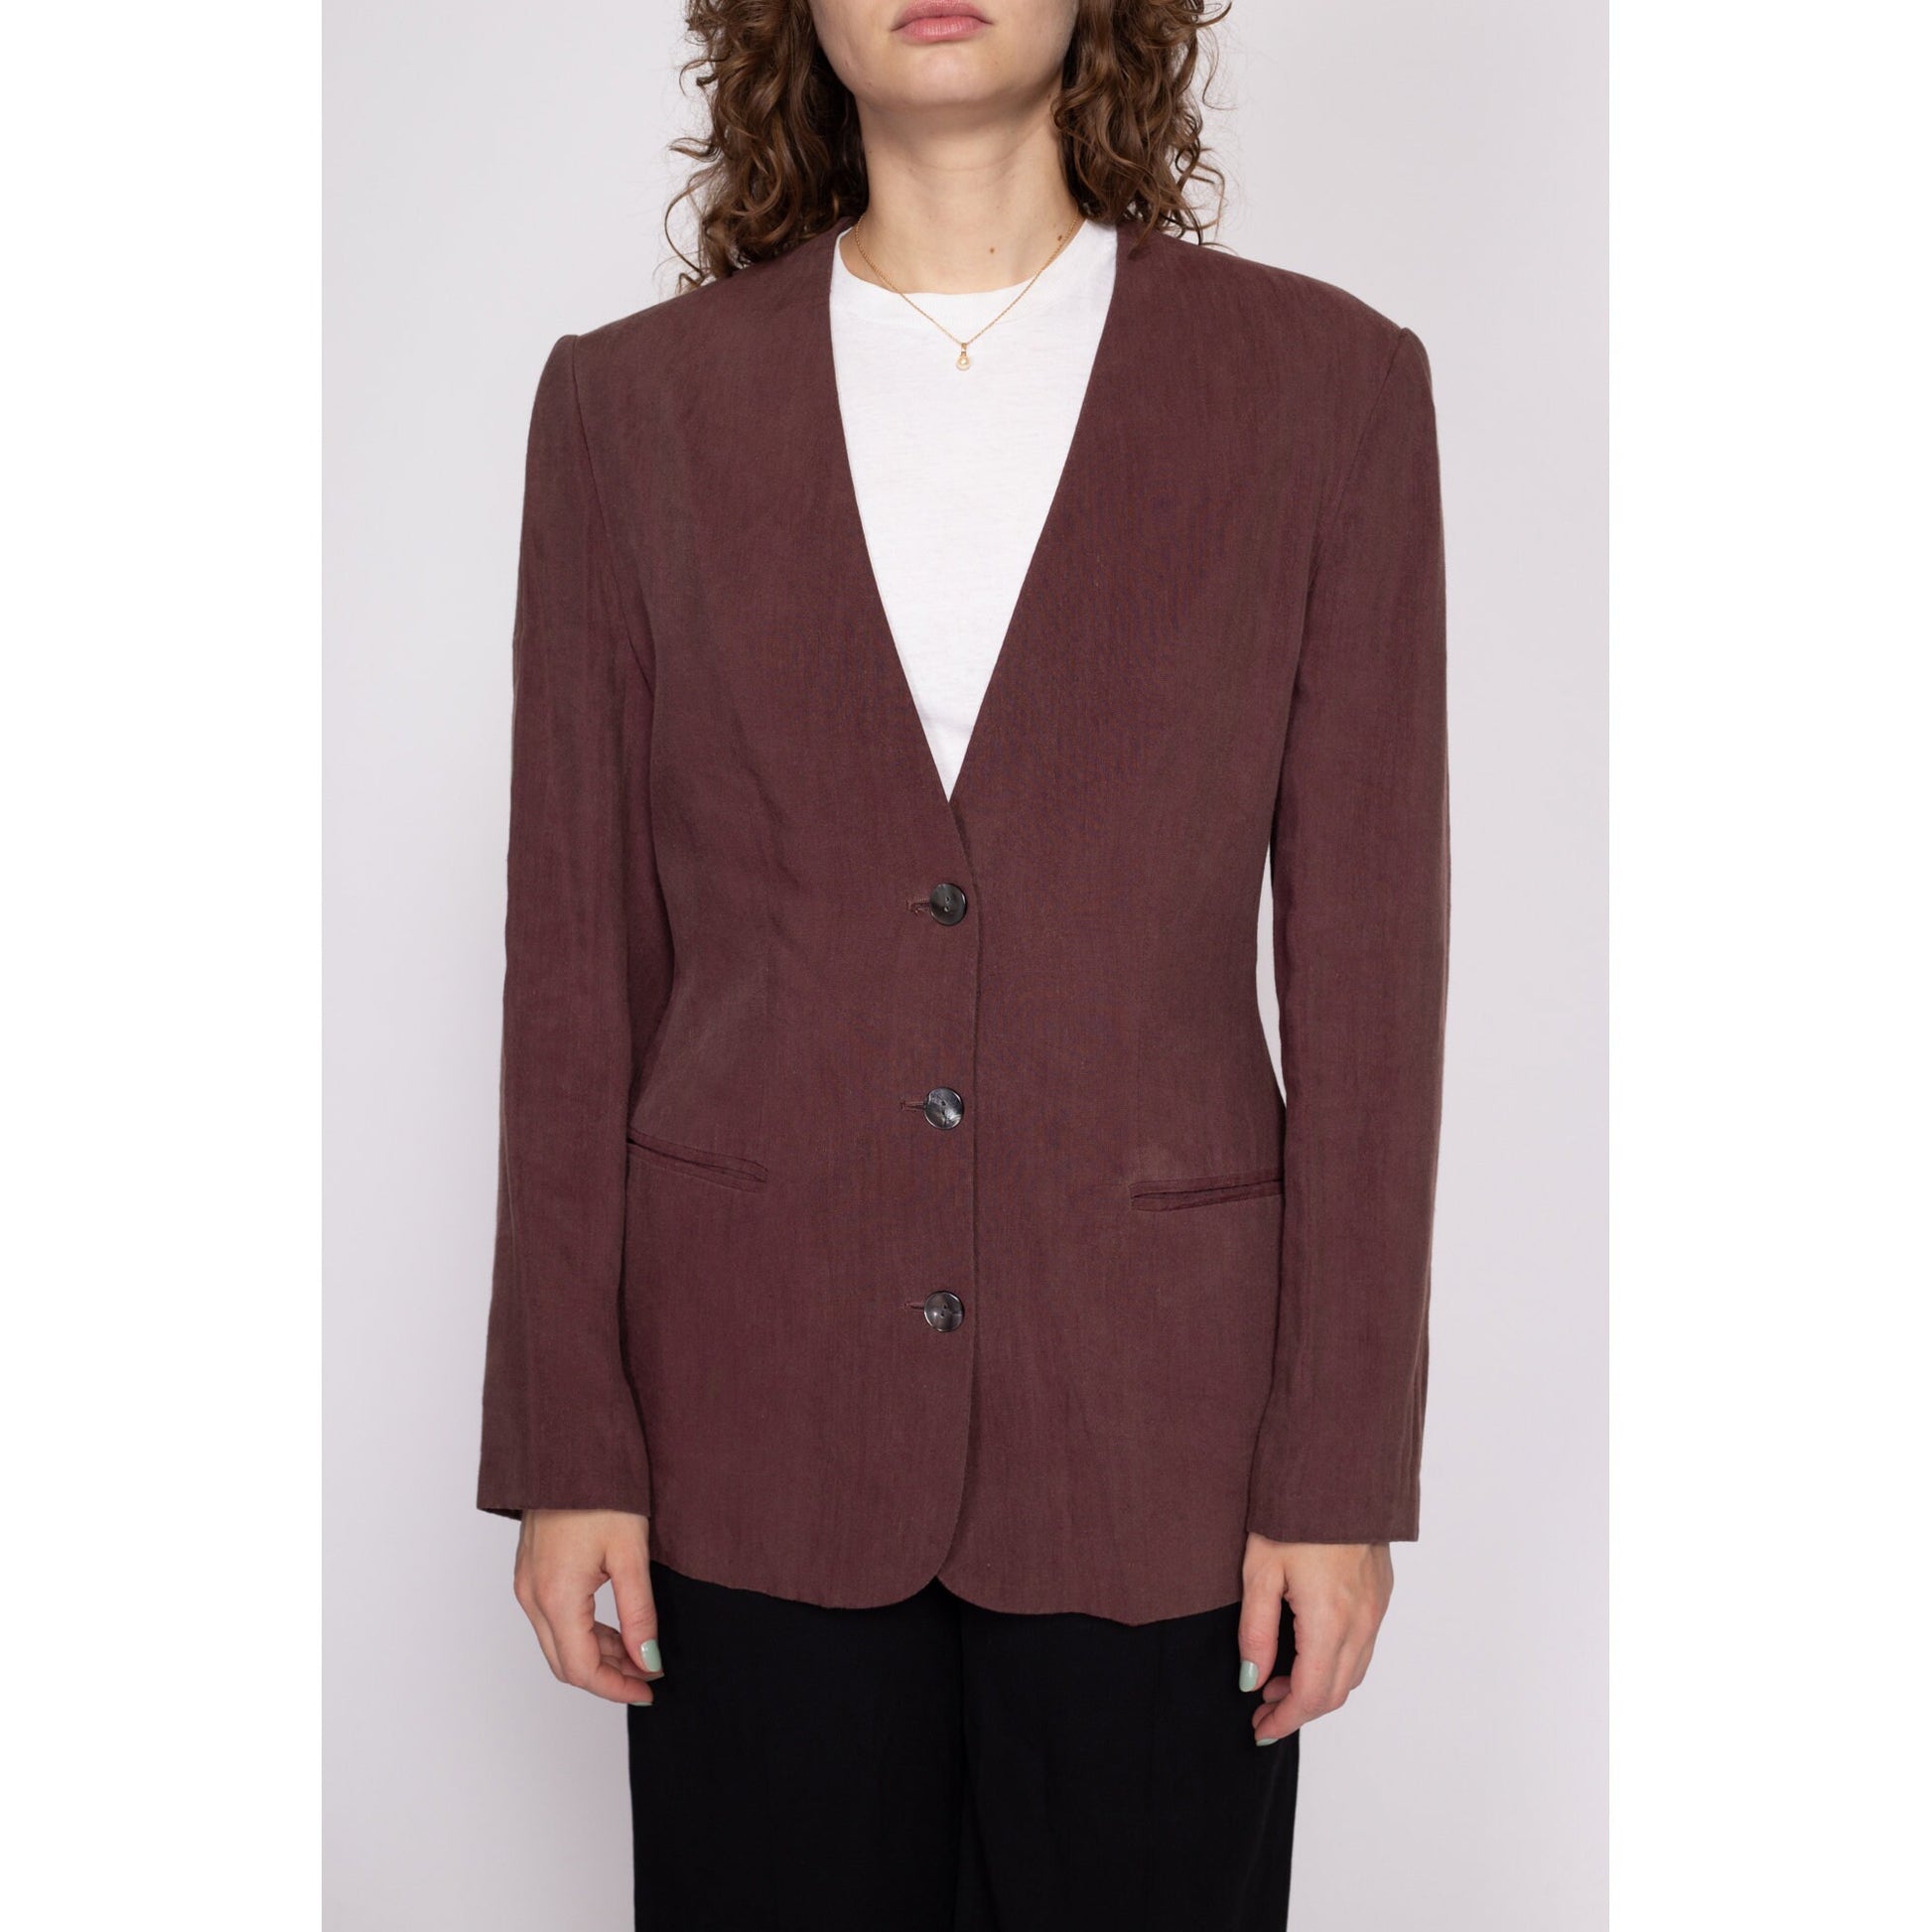 M| 90s Banana Republic Plum Linen Blazer - Medium | Vintage Oversized Button Up Jacket